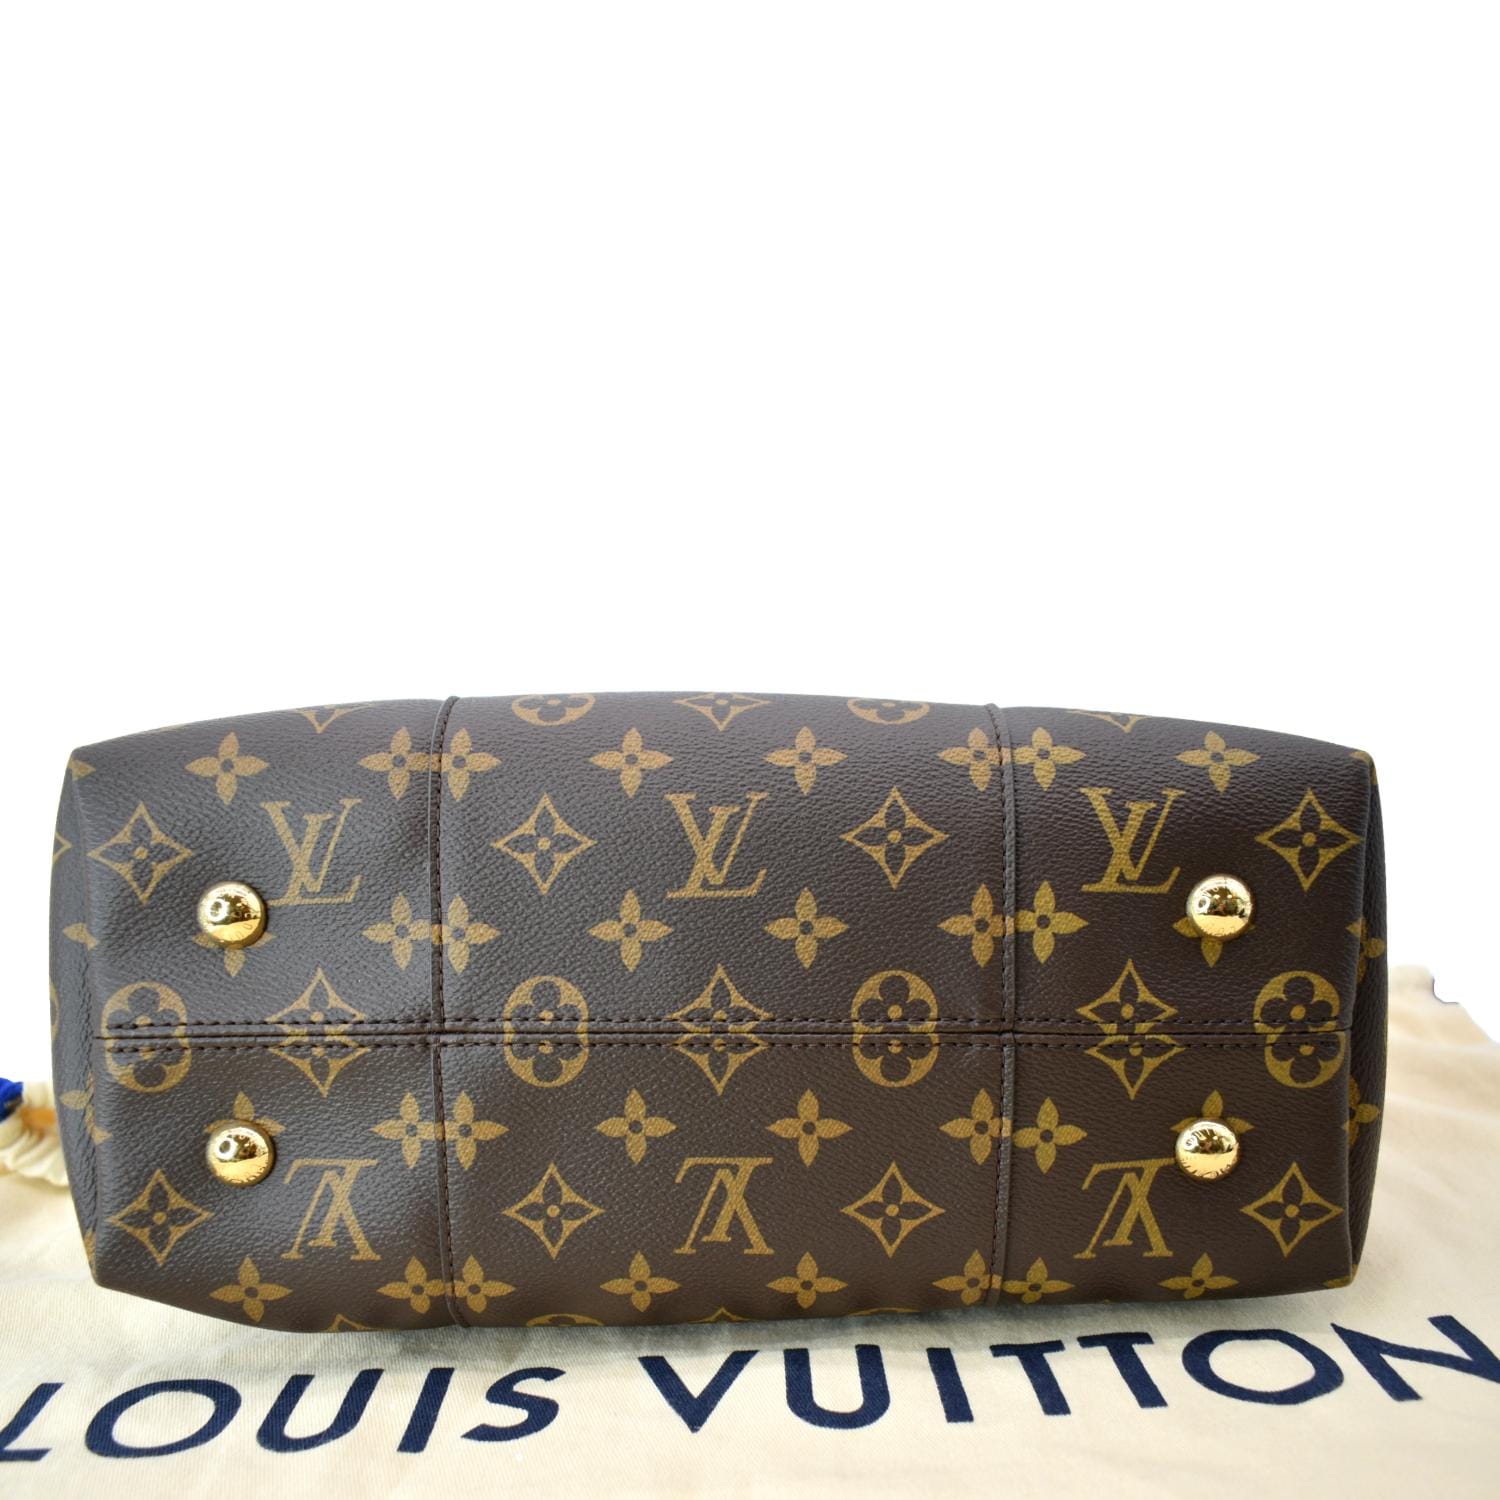 Louis Vuitton Melie hobo 1495.00 ❌sold❌please DM @luxeluxurylabels for  purchase